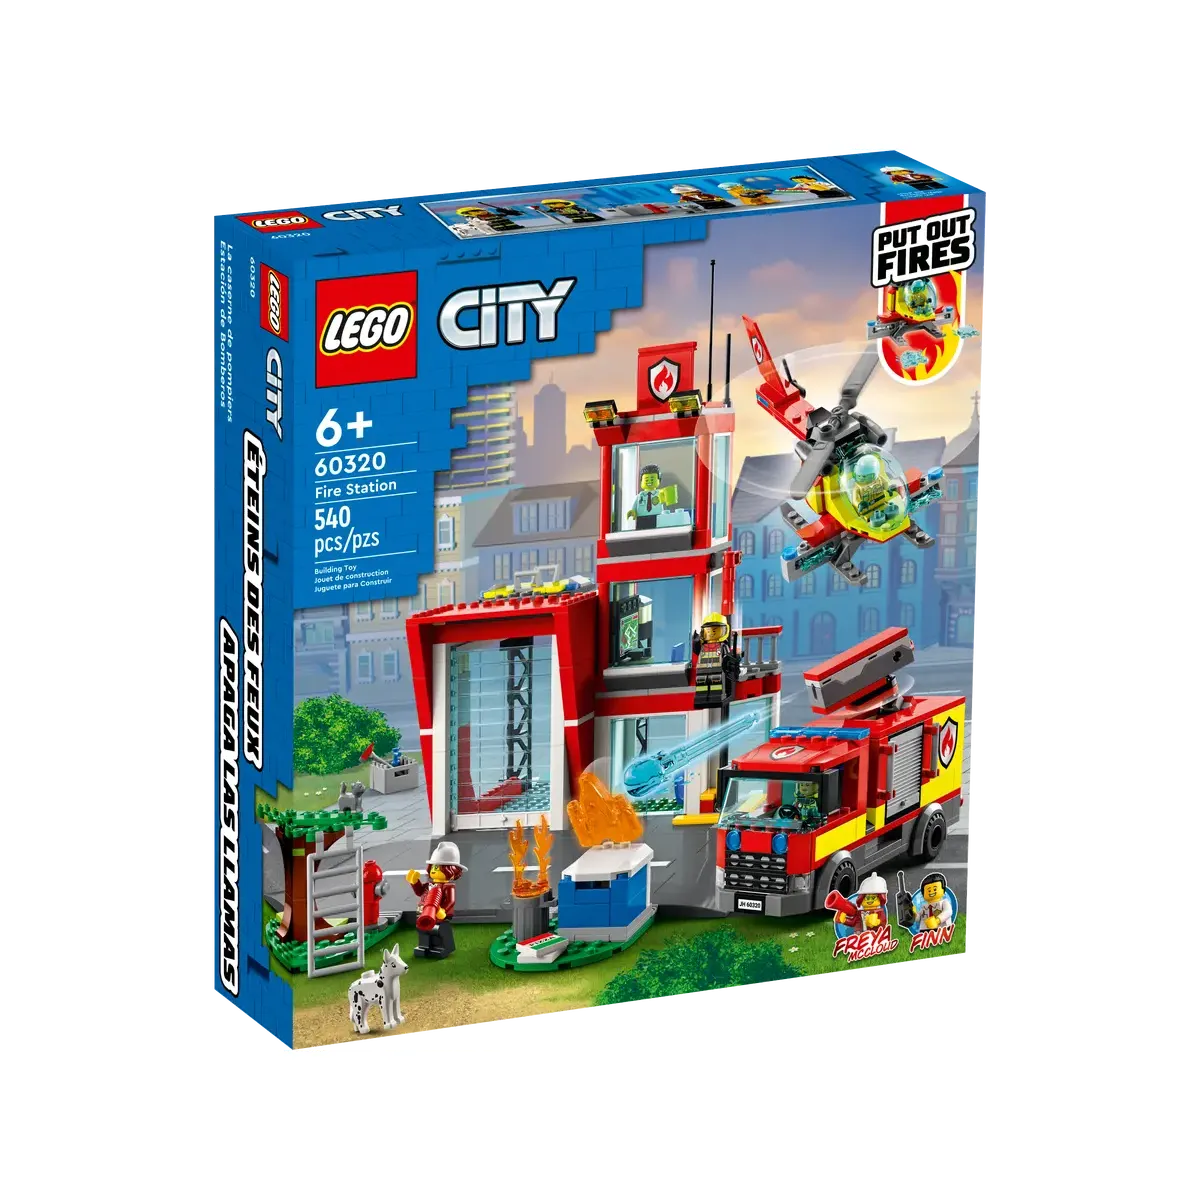 Fire Station - LEGO City